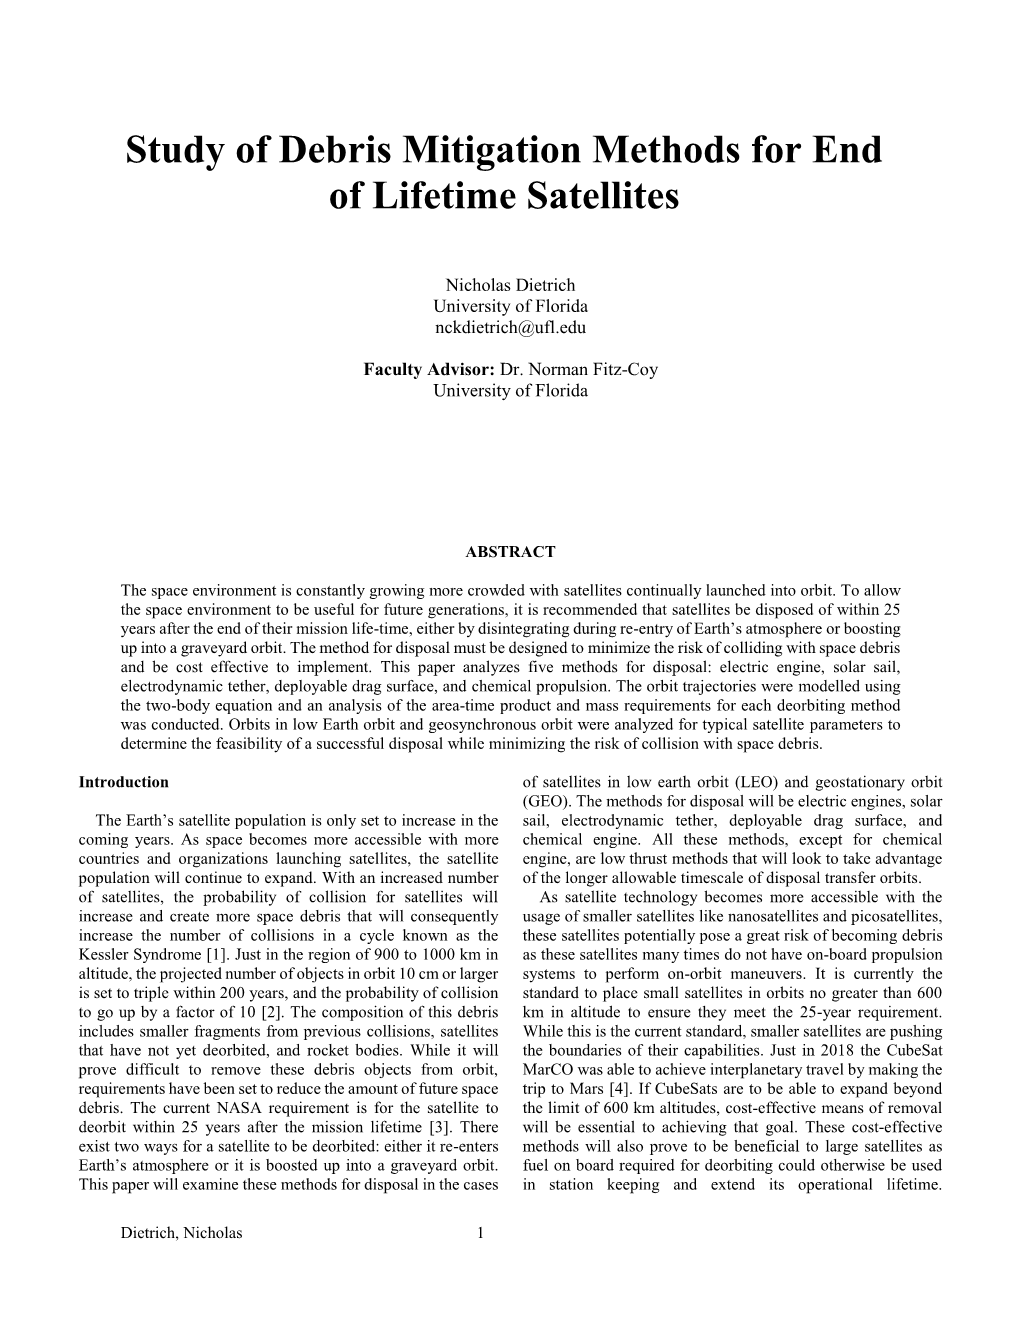 Study of Debris Mitigation Methods for End of Lifetime Satellites